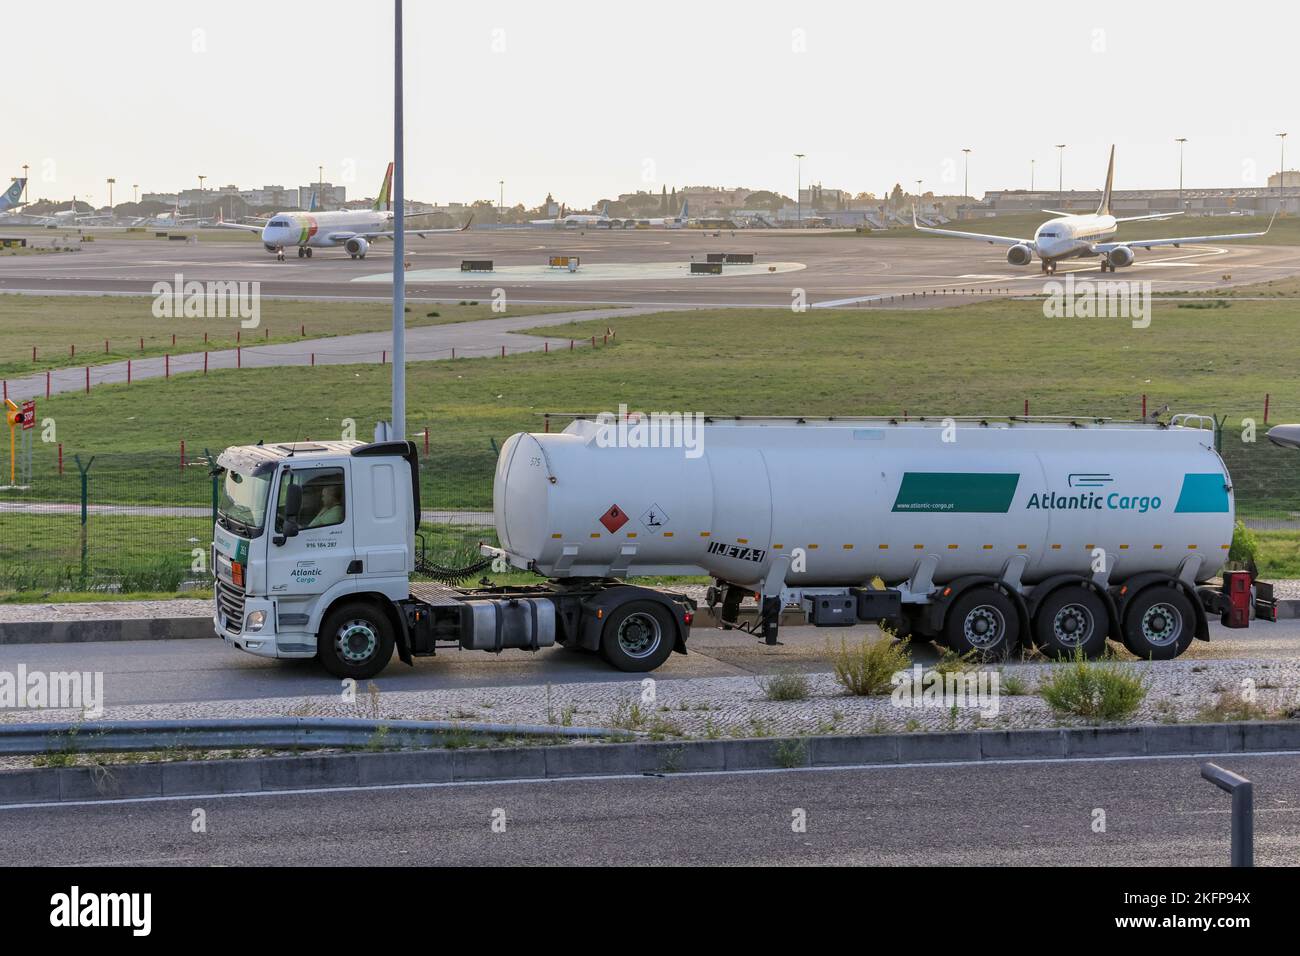 The Atlantic Cargo gasoline delivery truck Stock Photo